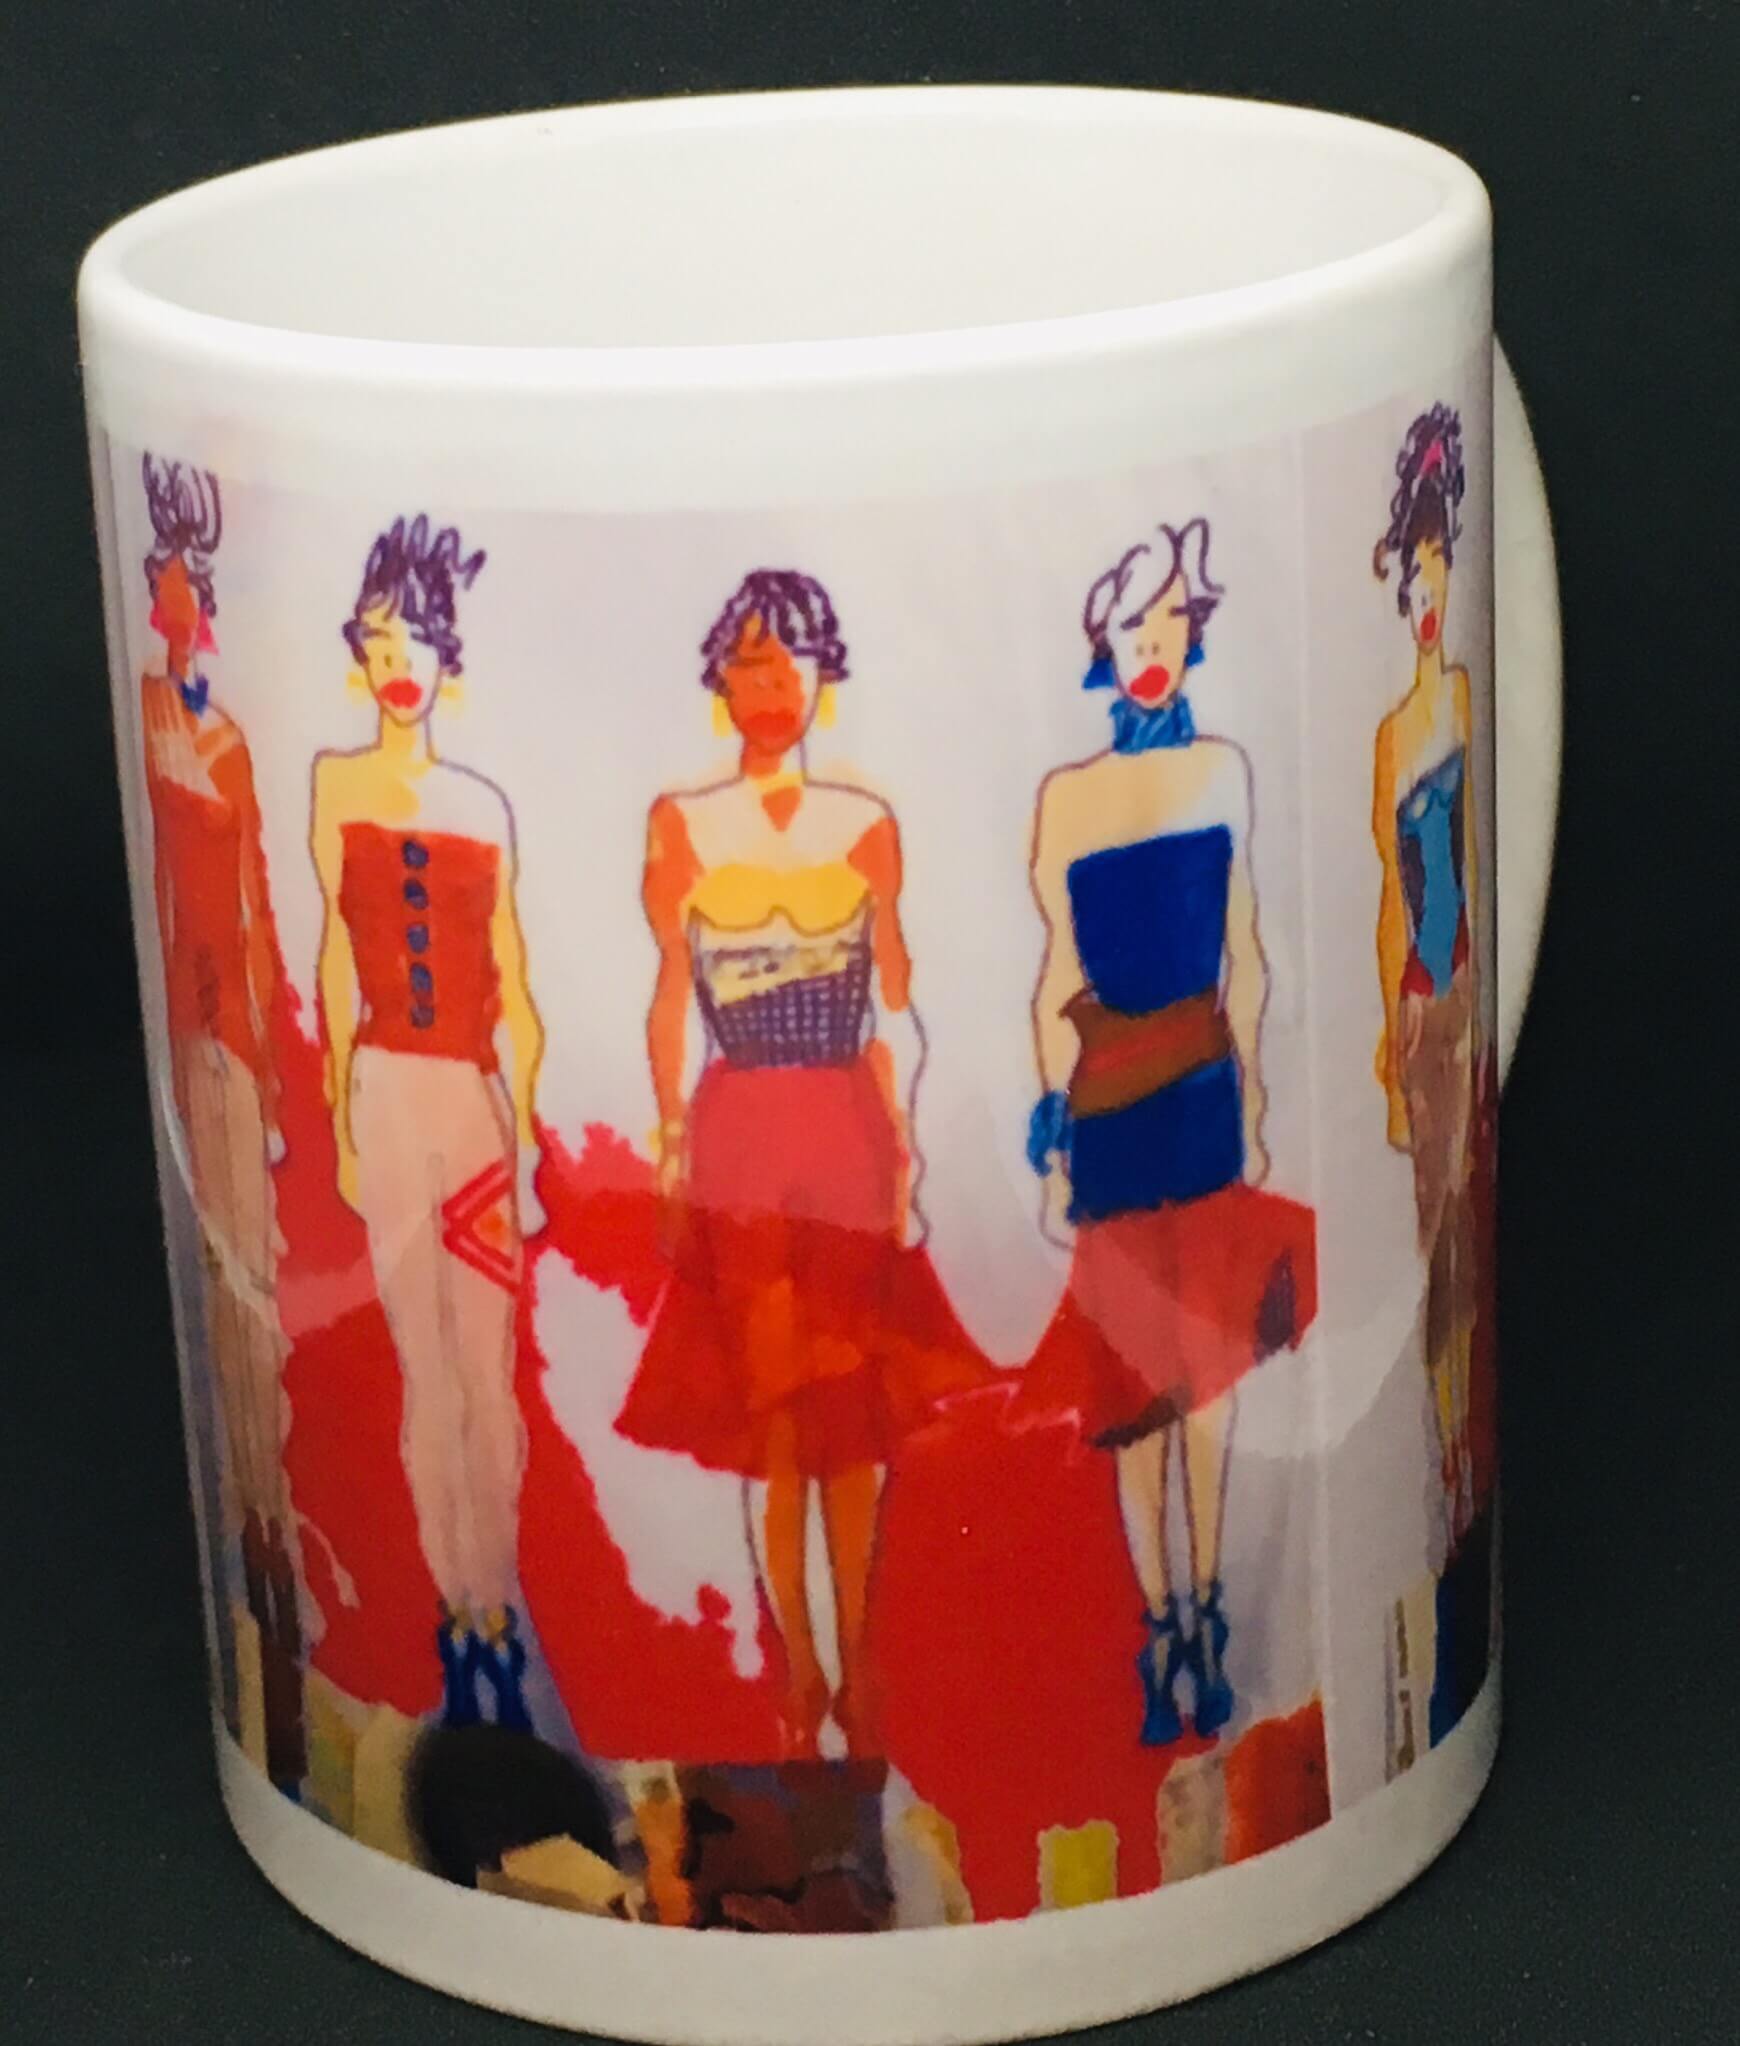 Mug showing fashion illustrations design